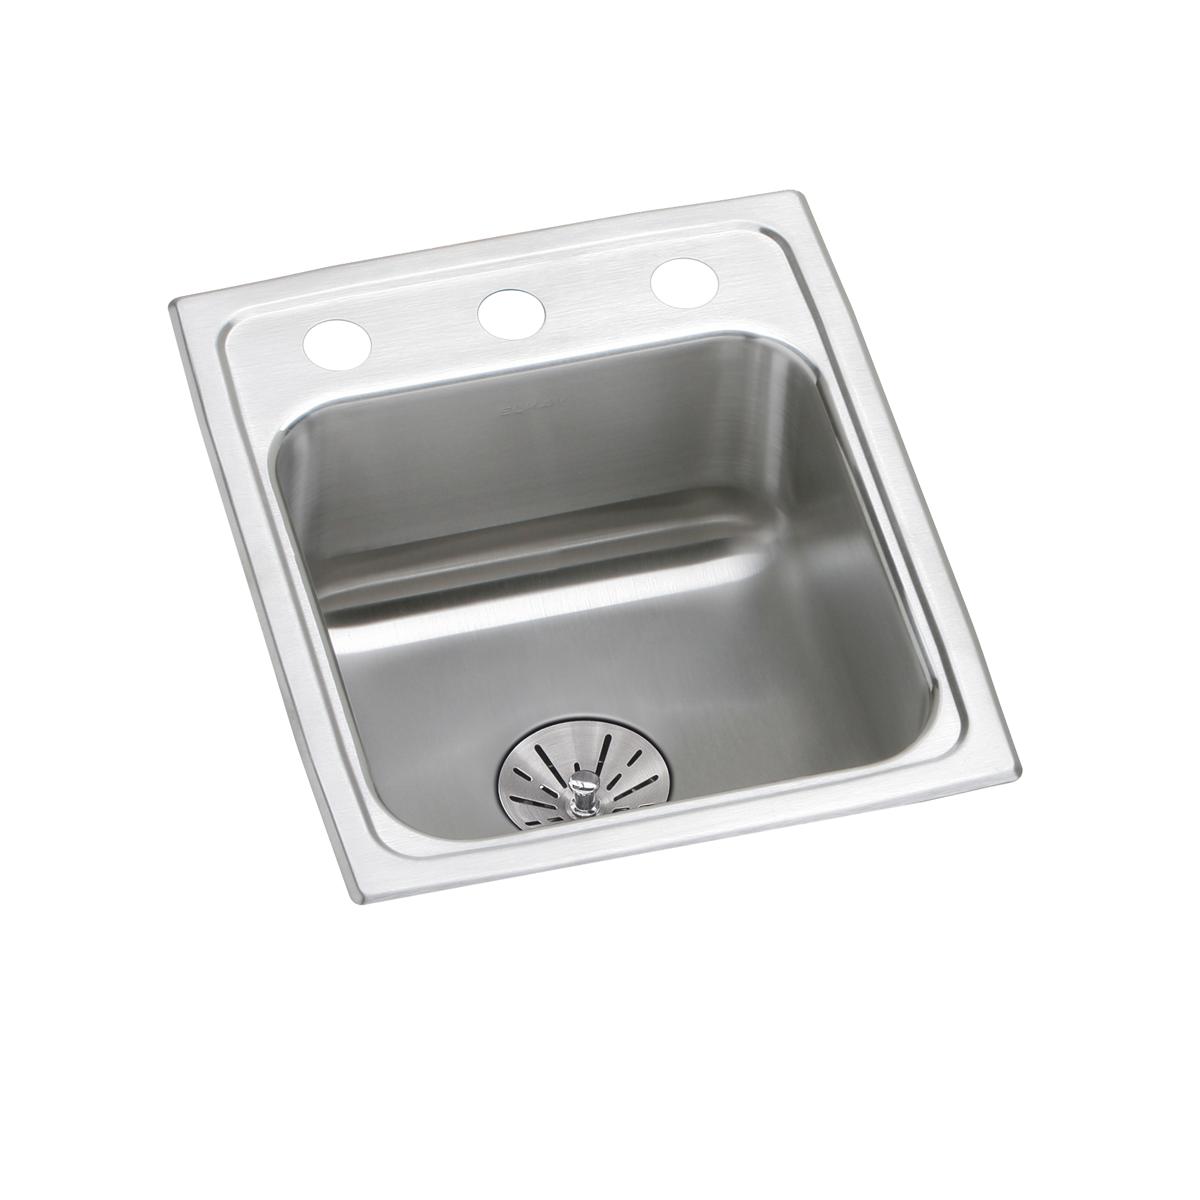 Elkay Lustertone Classic 13" x 16" x 6-1/2" MR2-Hole Single Bowl Drop-in ADA Sink with Perfect Drain